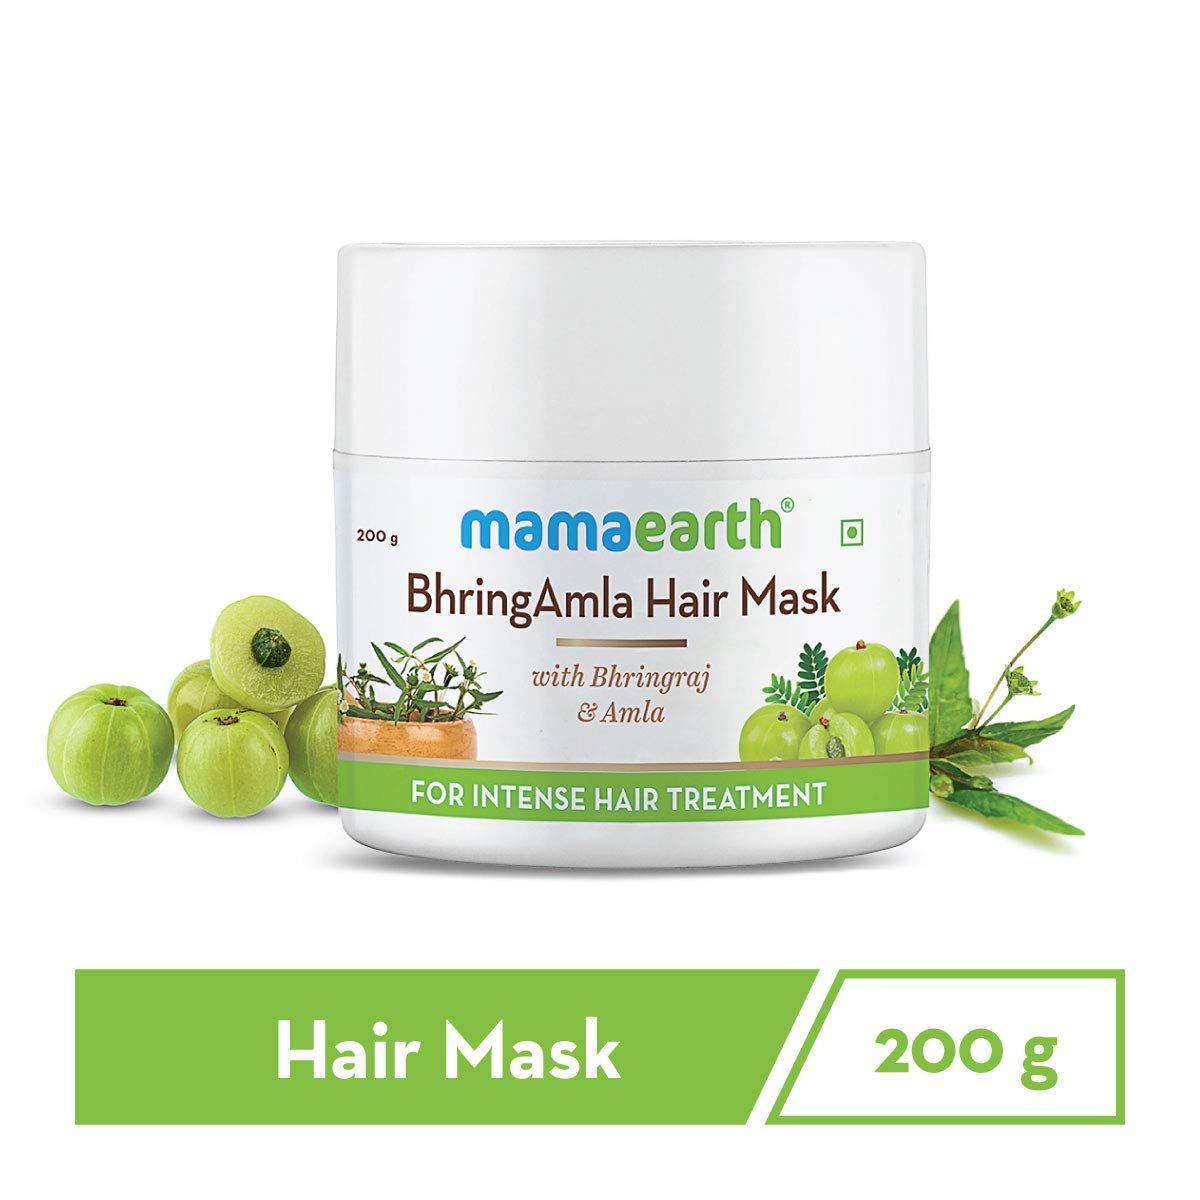 BhringAmla Hair Mask with Bhringraj and Amla for Intense Hair Treatment - 200 g